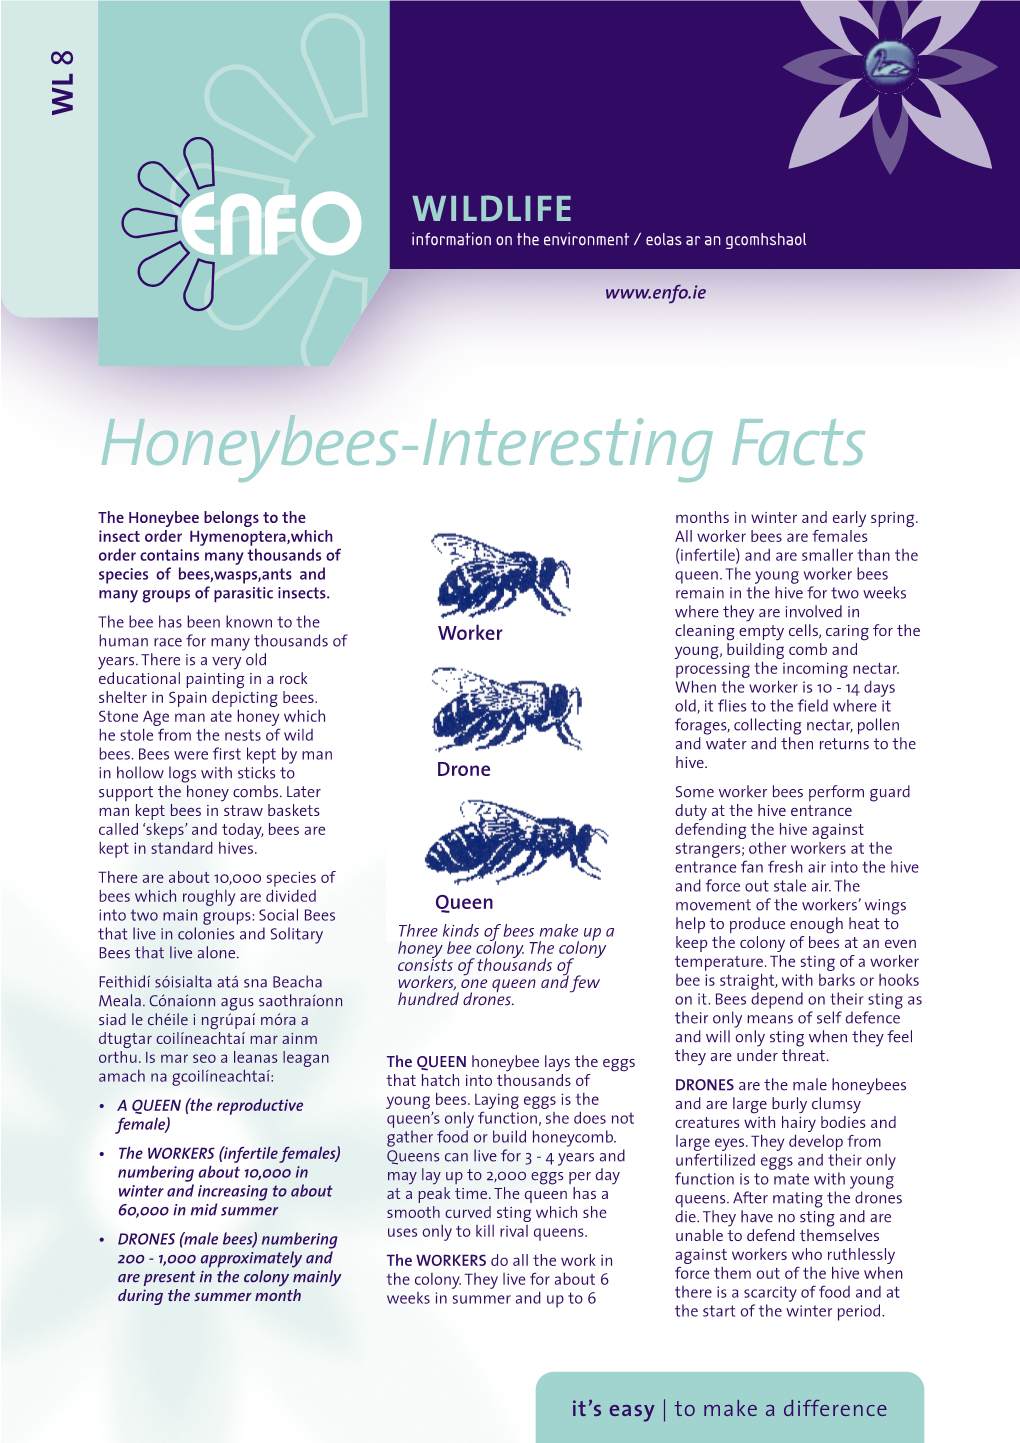 Honeybees-Interesting Facts